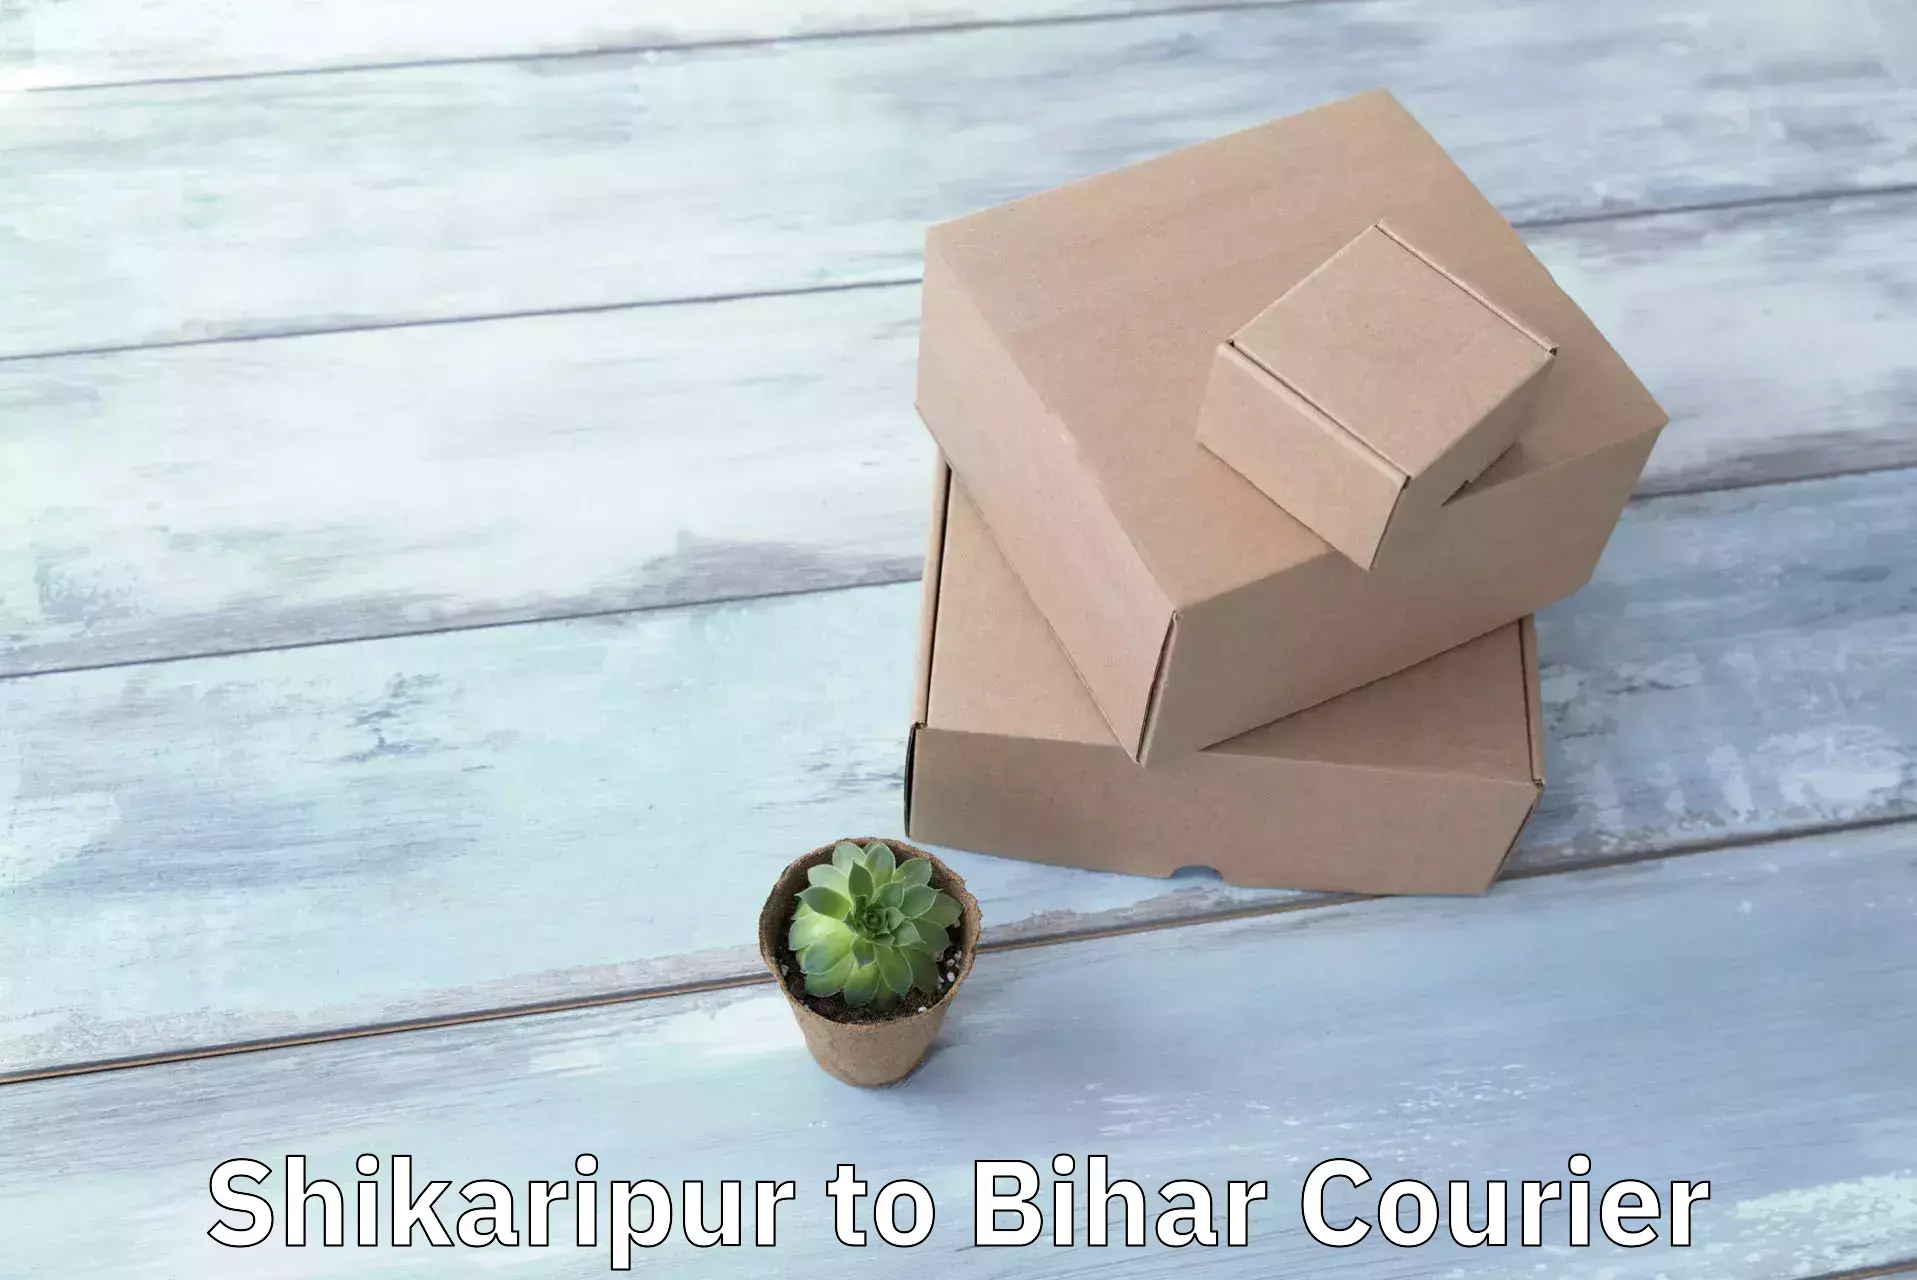 Parcel handling and care Shikaripur to Bihar